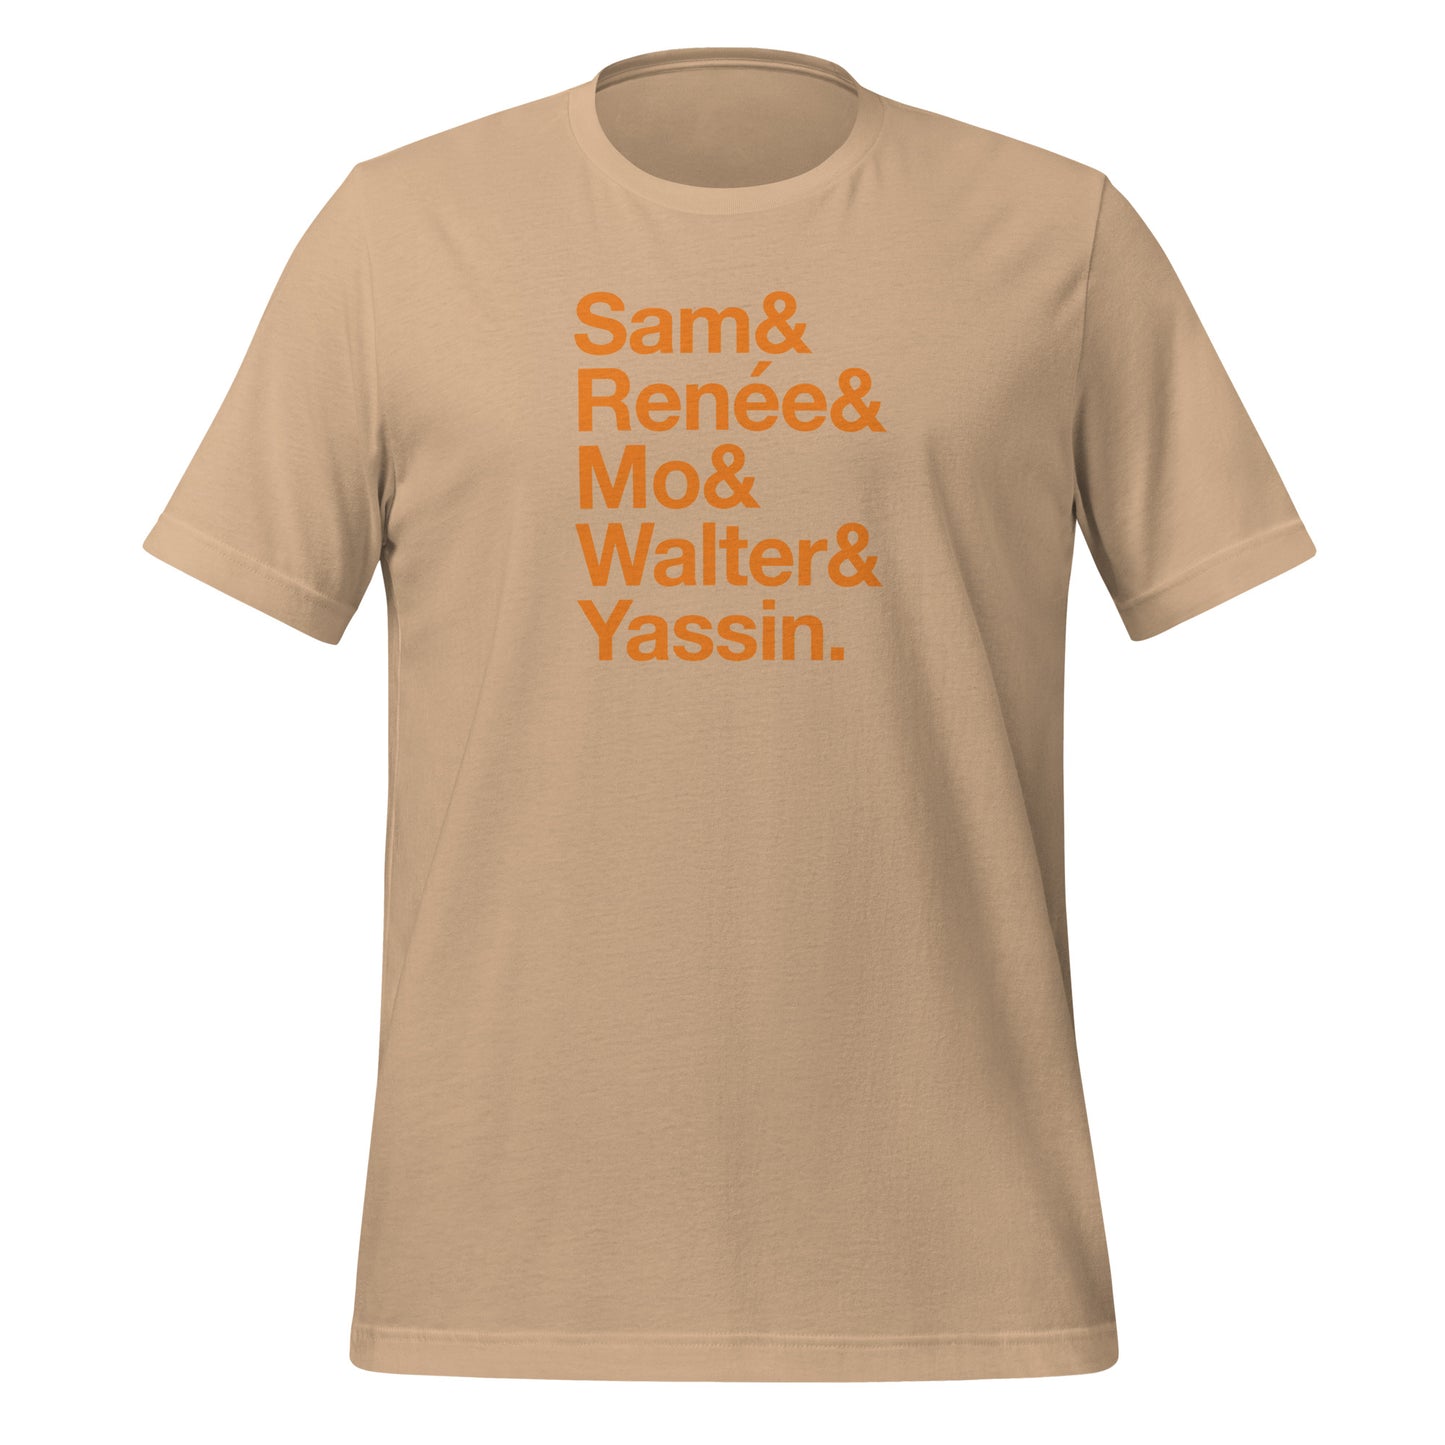 Sam&Renée&Mo&Walter&Yassin unisex printed t-shirt